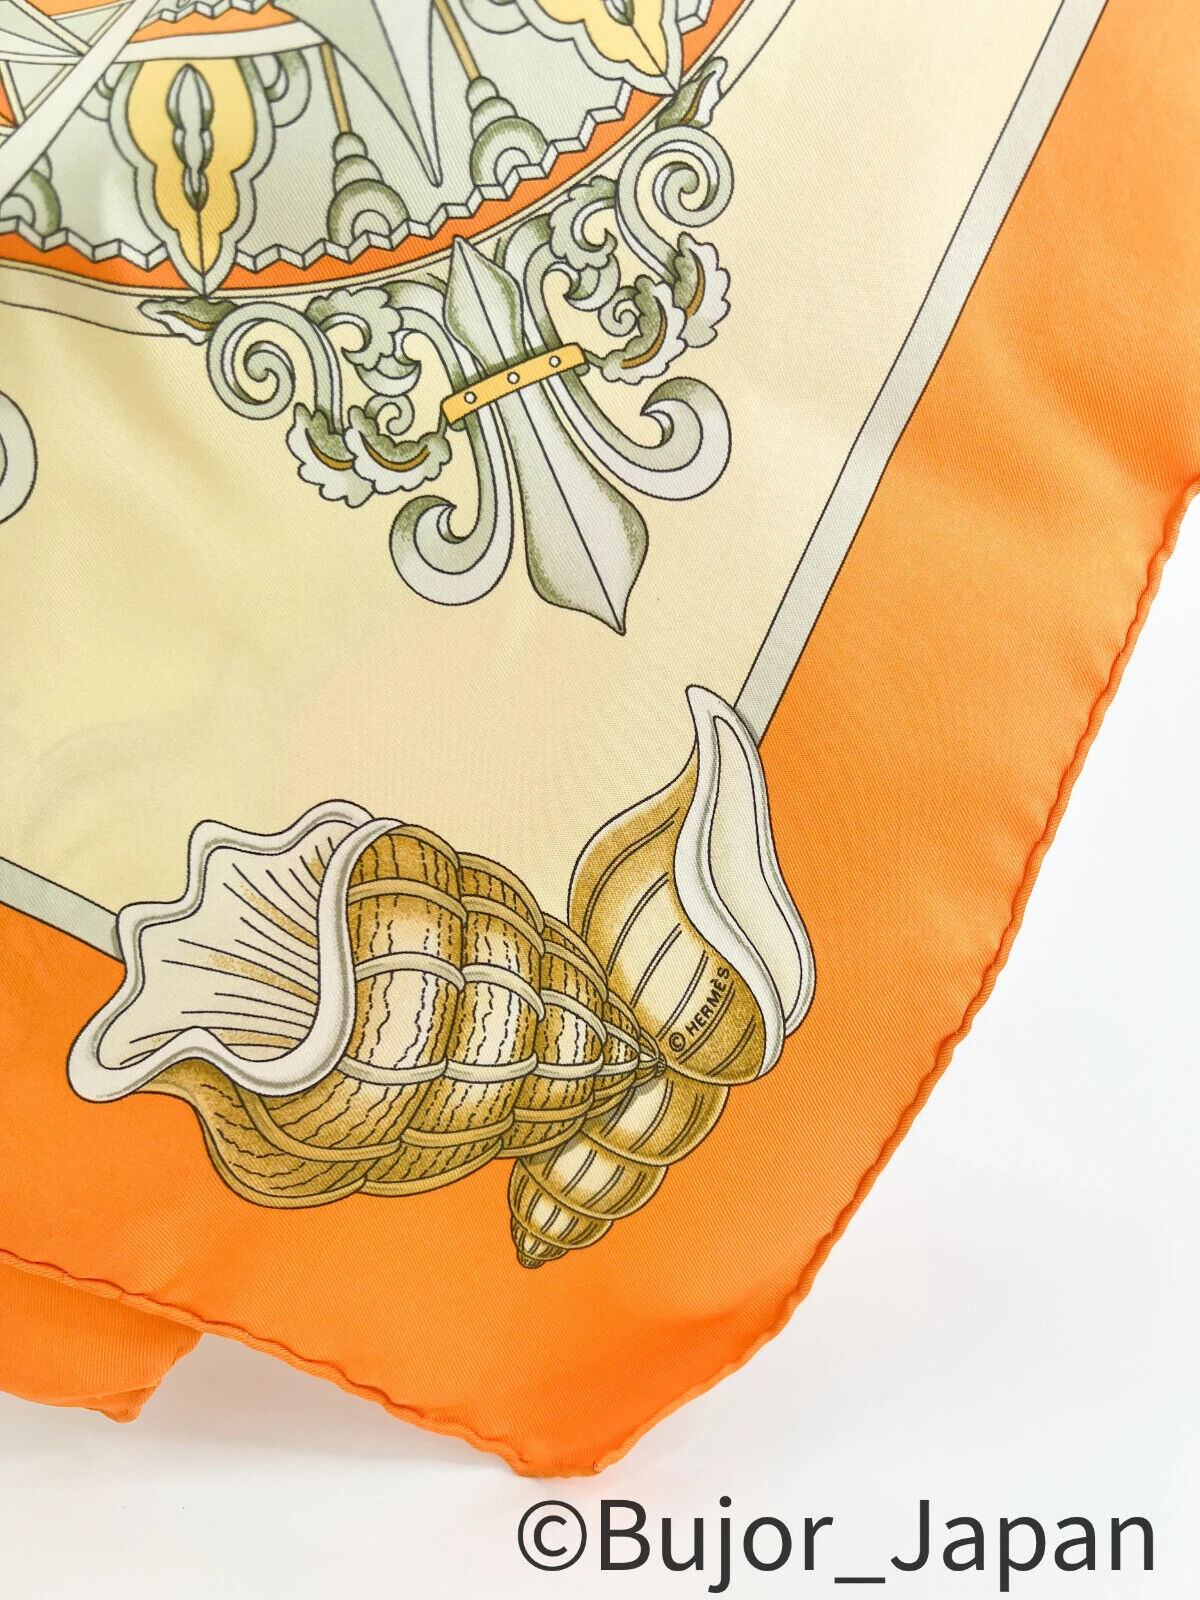 Vintage Hermes Scarf "Lair Marin" J.Metz Vintage silk scarf orange, Made in France, Silk Scarves, Accessories for Women, Gift for her